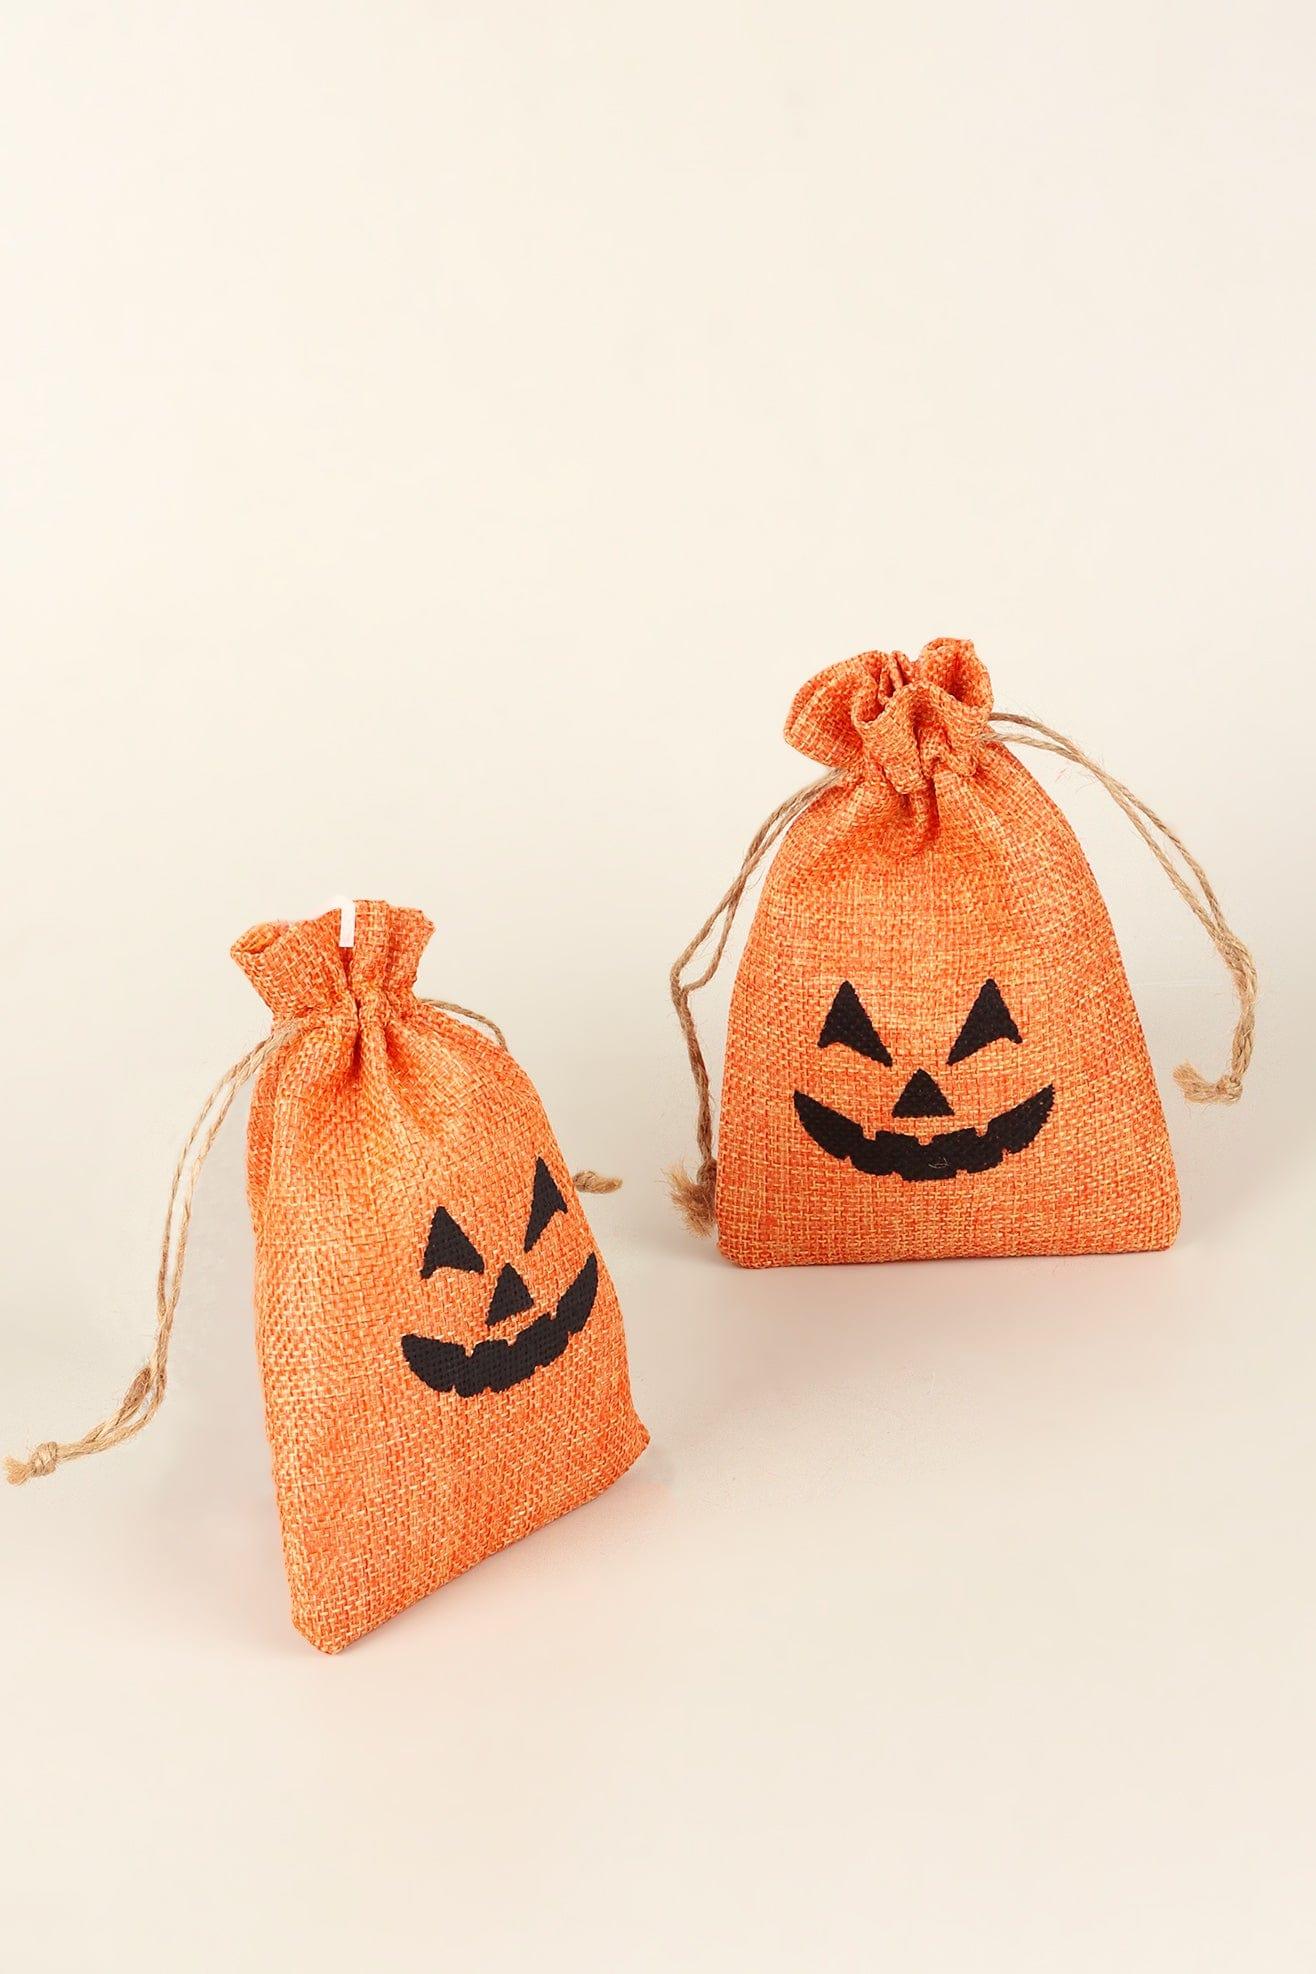 G Decor Set of 5 or 10 - Spooky Jack O'Lantern Halloween Hessian Gift Bags